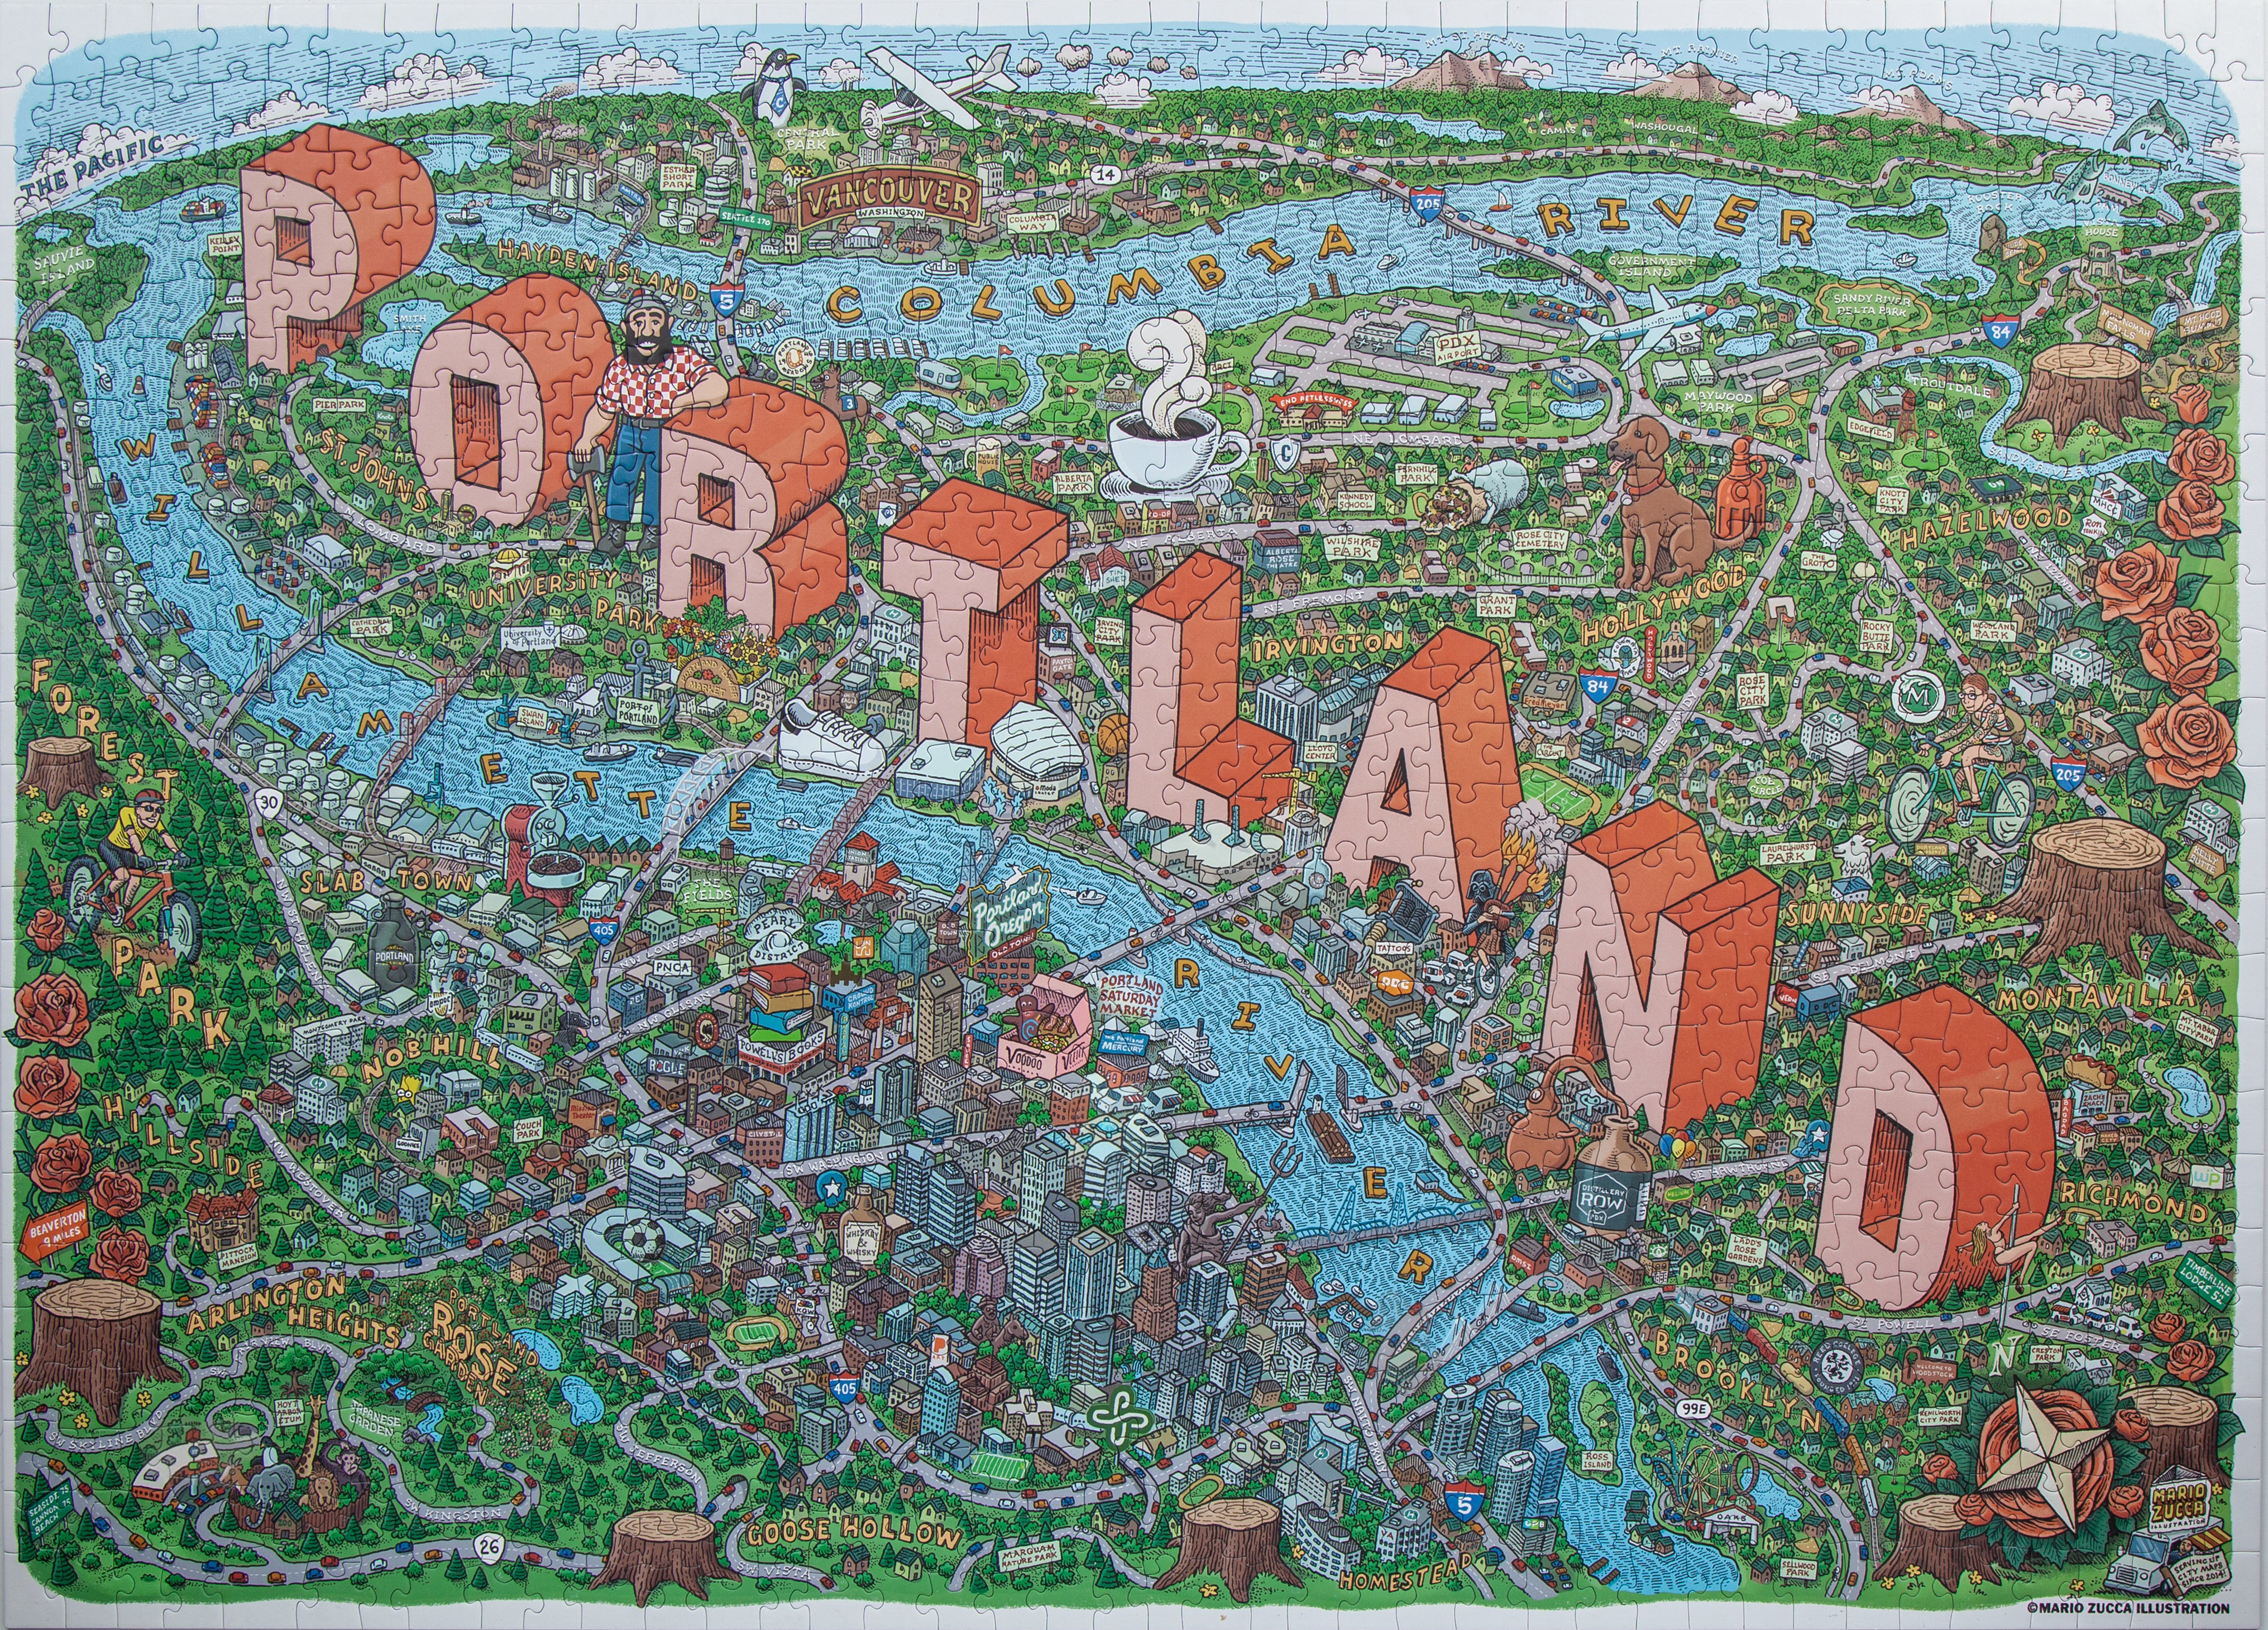 Portland | 1,000 Piece Puzzle